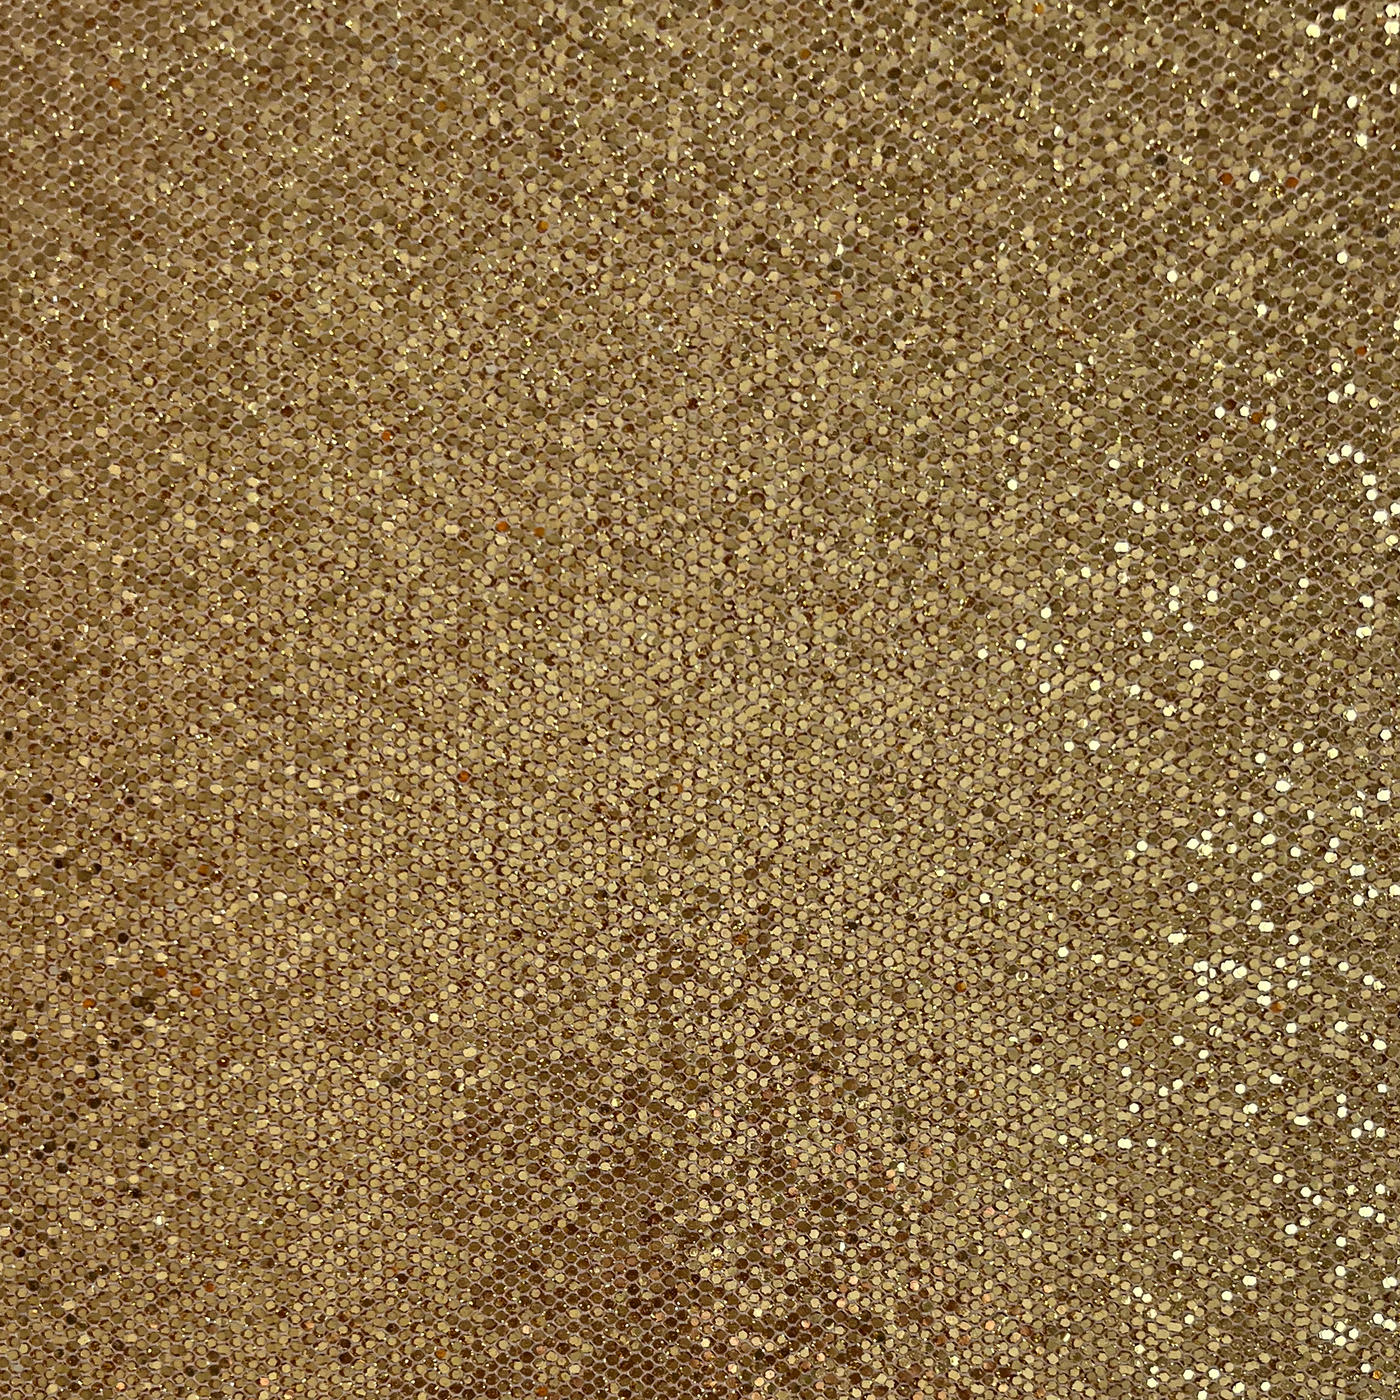 GOLD TREASURE Sequin Glitter Cardstock